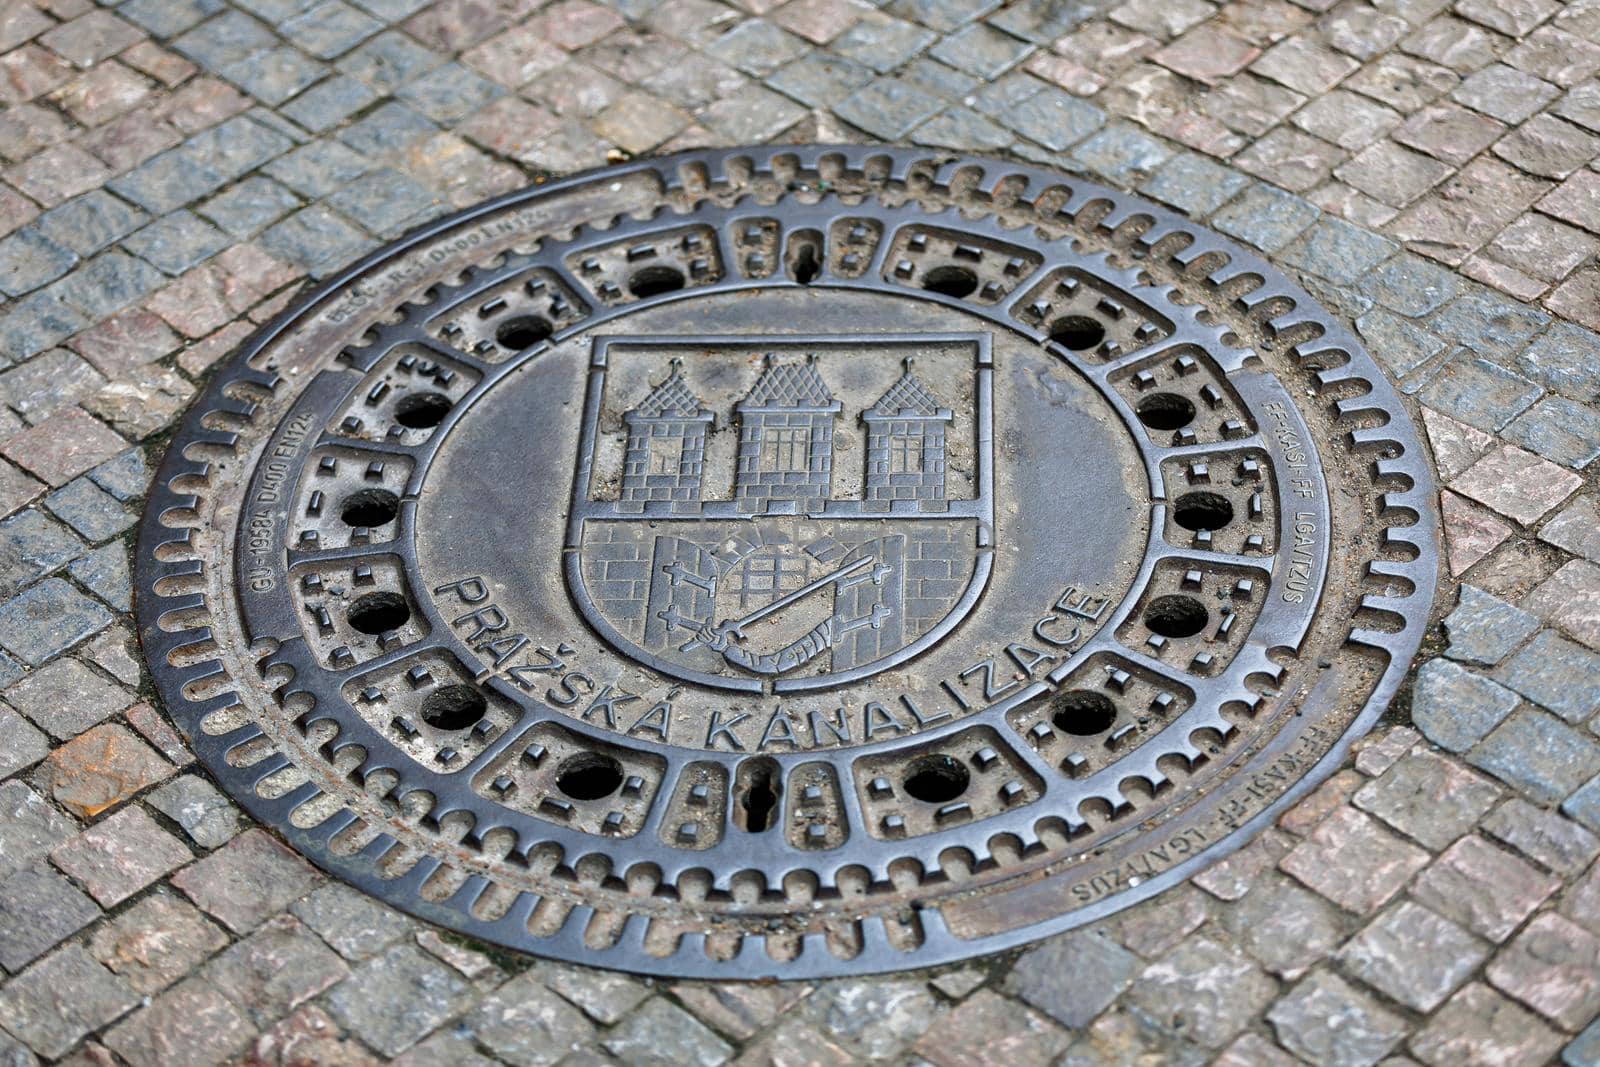 Prague, Czech Republic - April 13, 2018: Prazska Kanalizace manhole cover with the coat of arms of Prague and the tower of the bridge